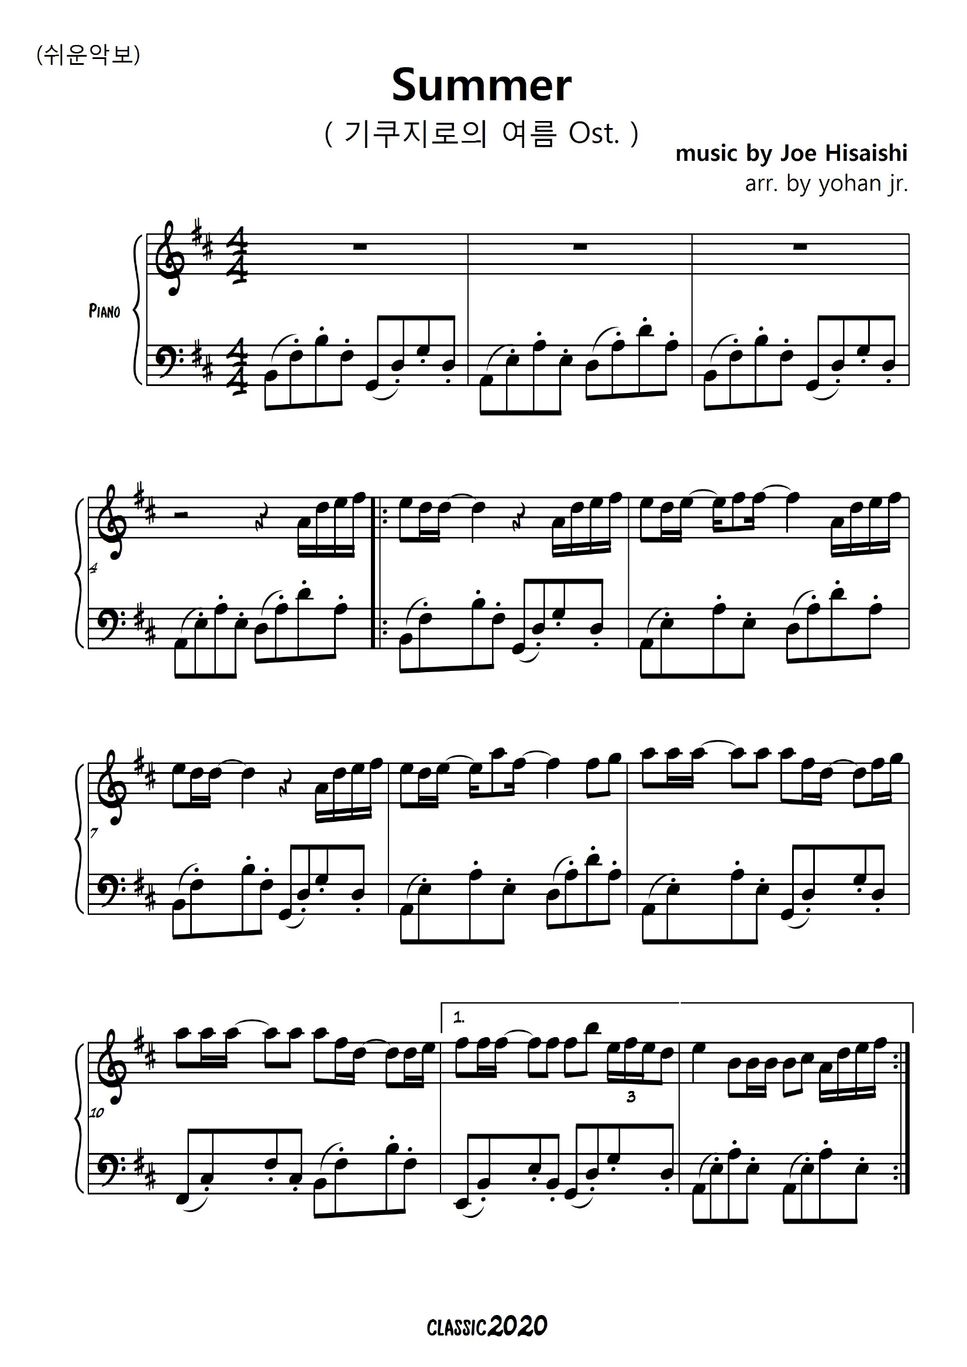 Volver a llamar invernadero Misión Joe Hisaishi - Summer (easy piano) Sheets by classic2020